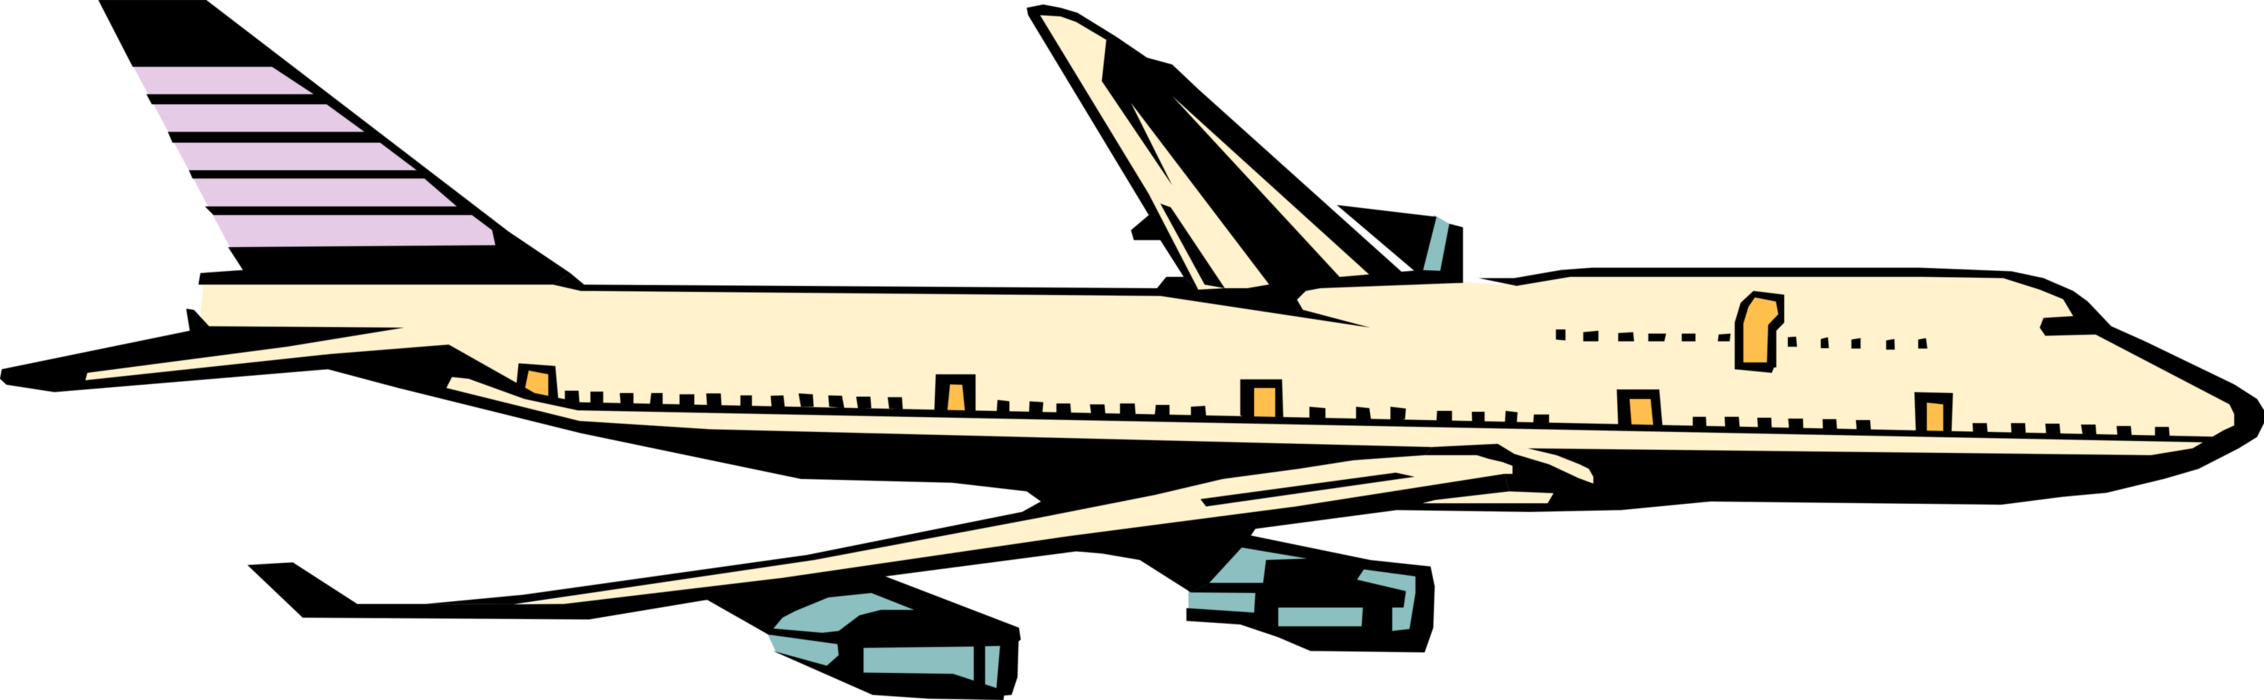 Vector Illustration of Commercial 747 Airplane Boeing Passenger Jumbo Jet Aircraft in Flight